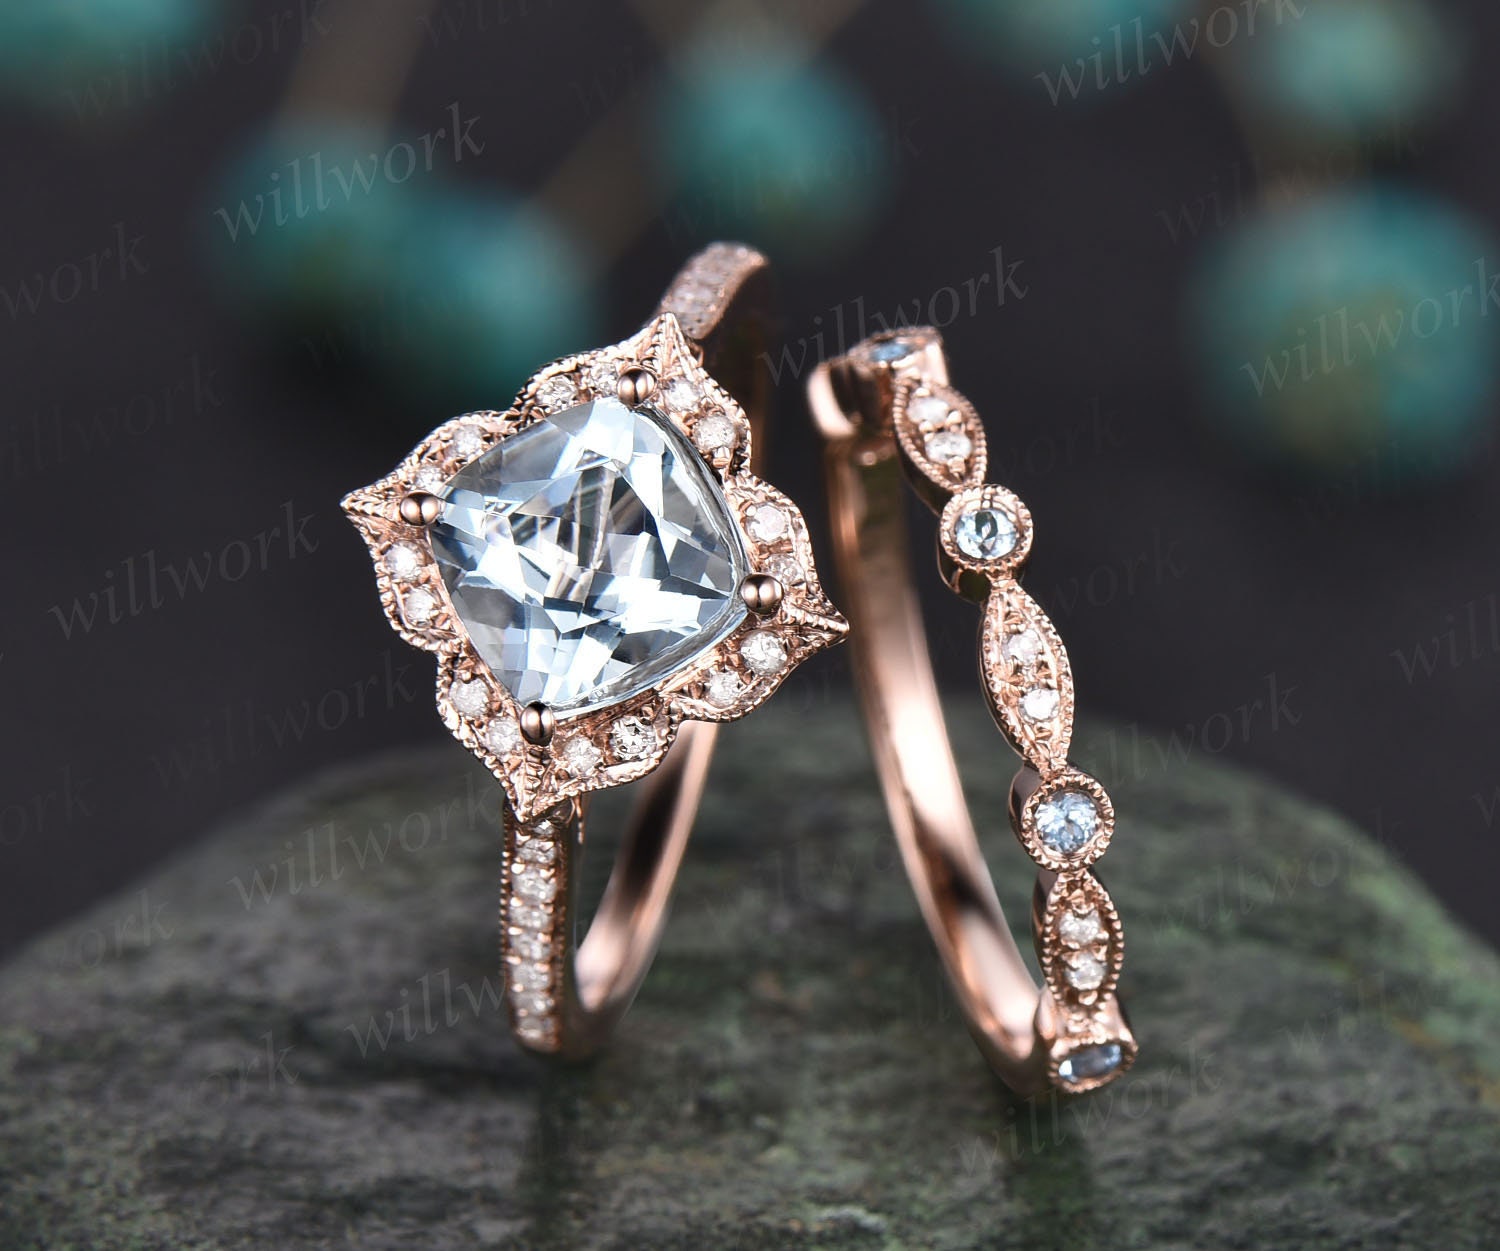 12ct Cushion Cut Aquamarine Mermaid Inspired Engagement Ring | SayaBling  Jewelry